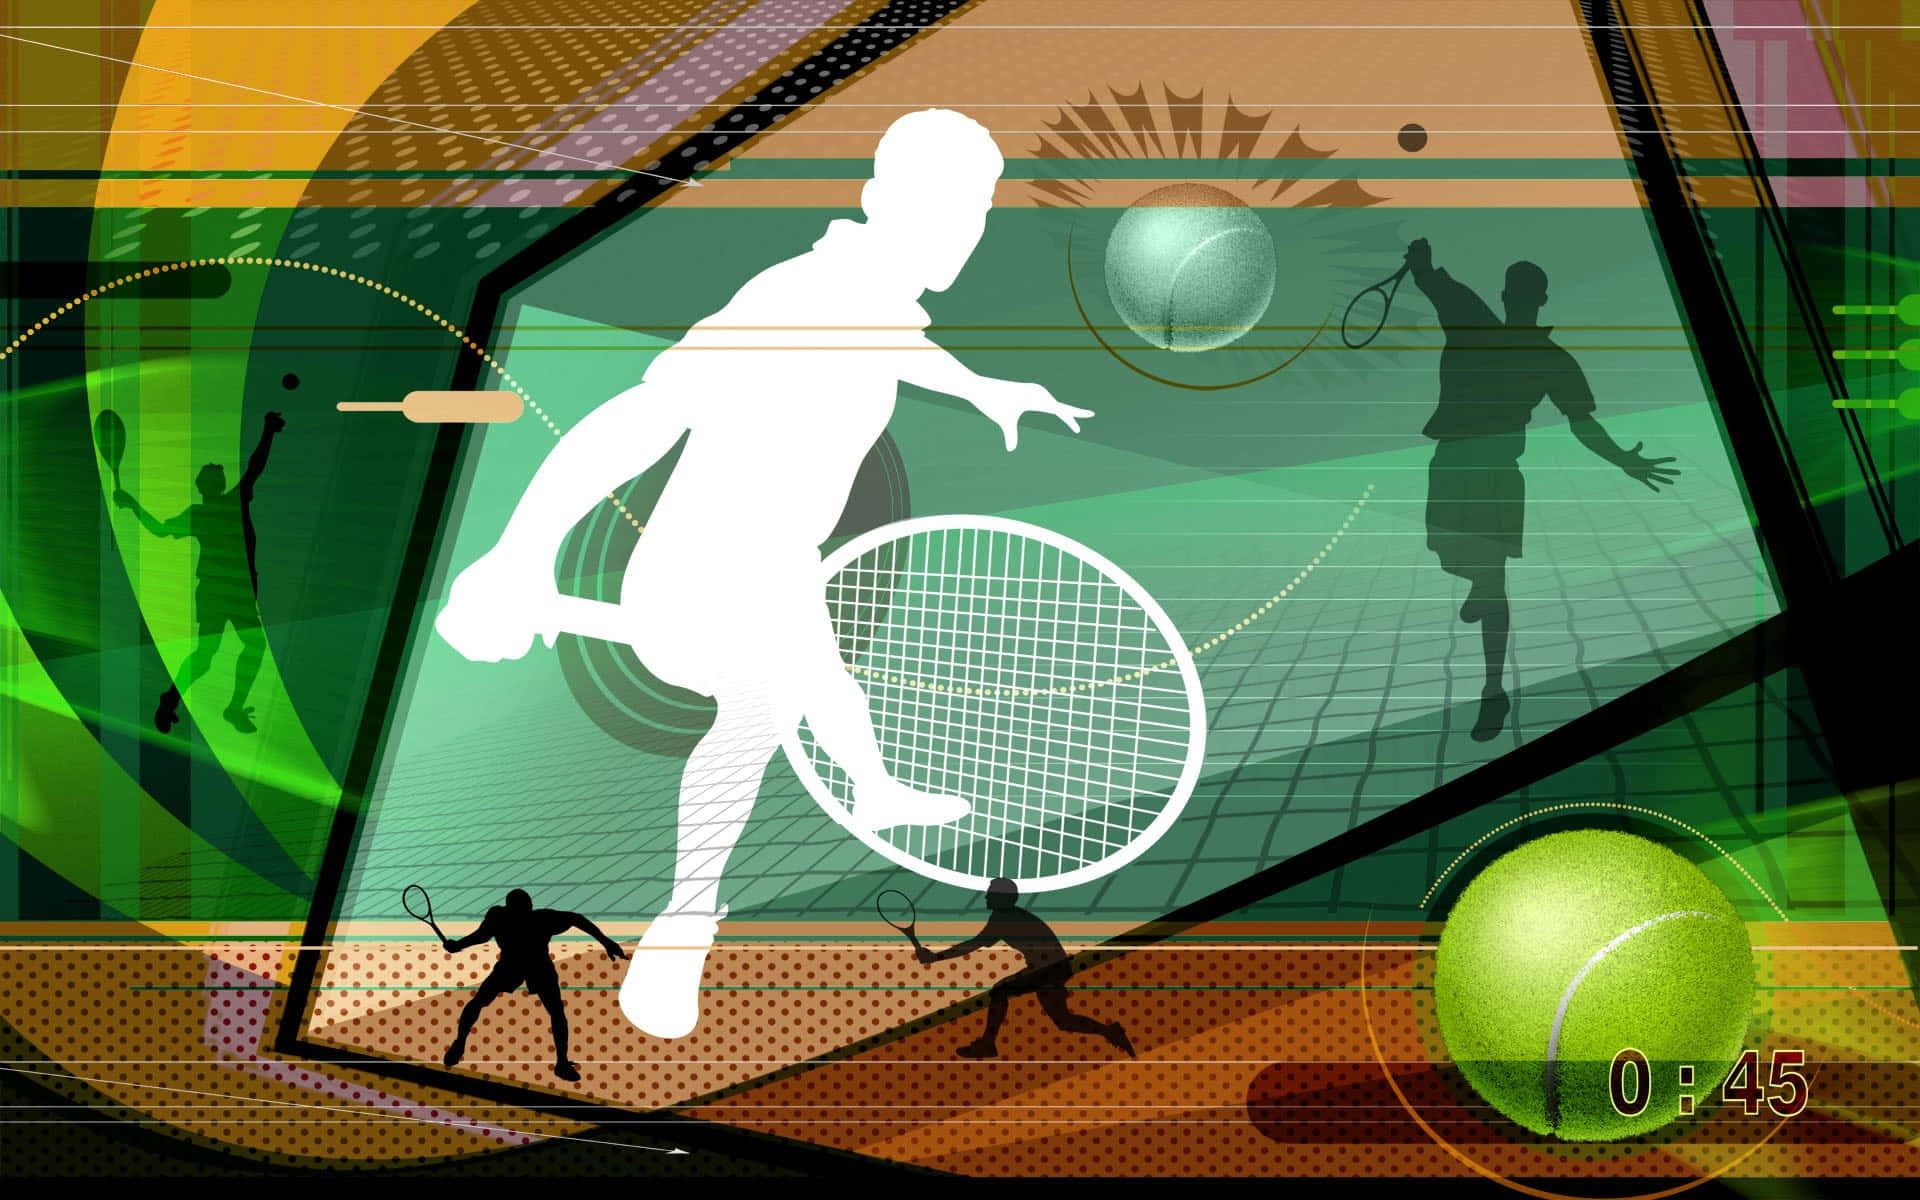 Tennis wallpaper with a player hitting a ball - Tennis